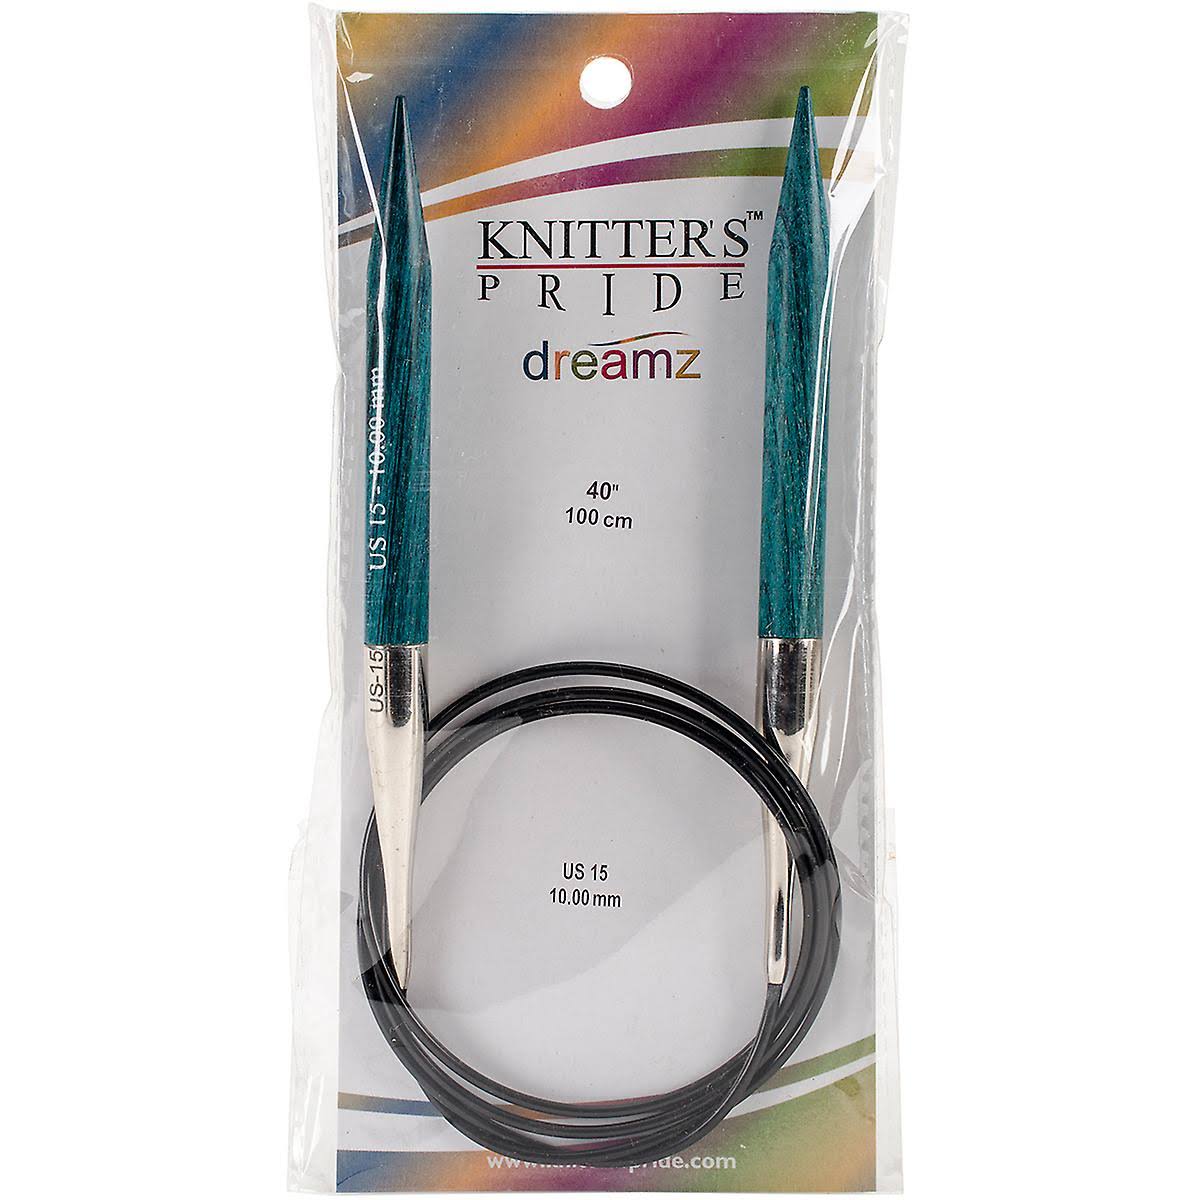 Knitters Pride Dreamz Circular Knitting Needles - 40", Size 15